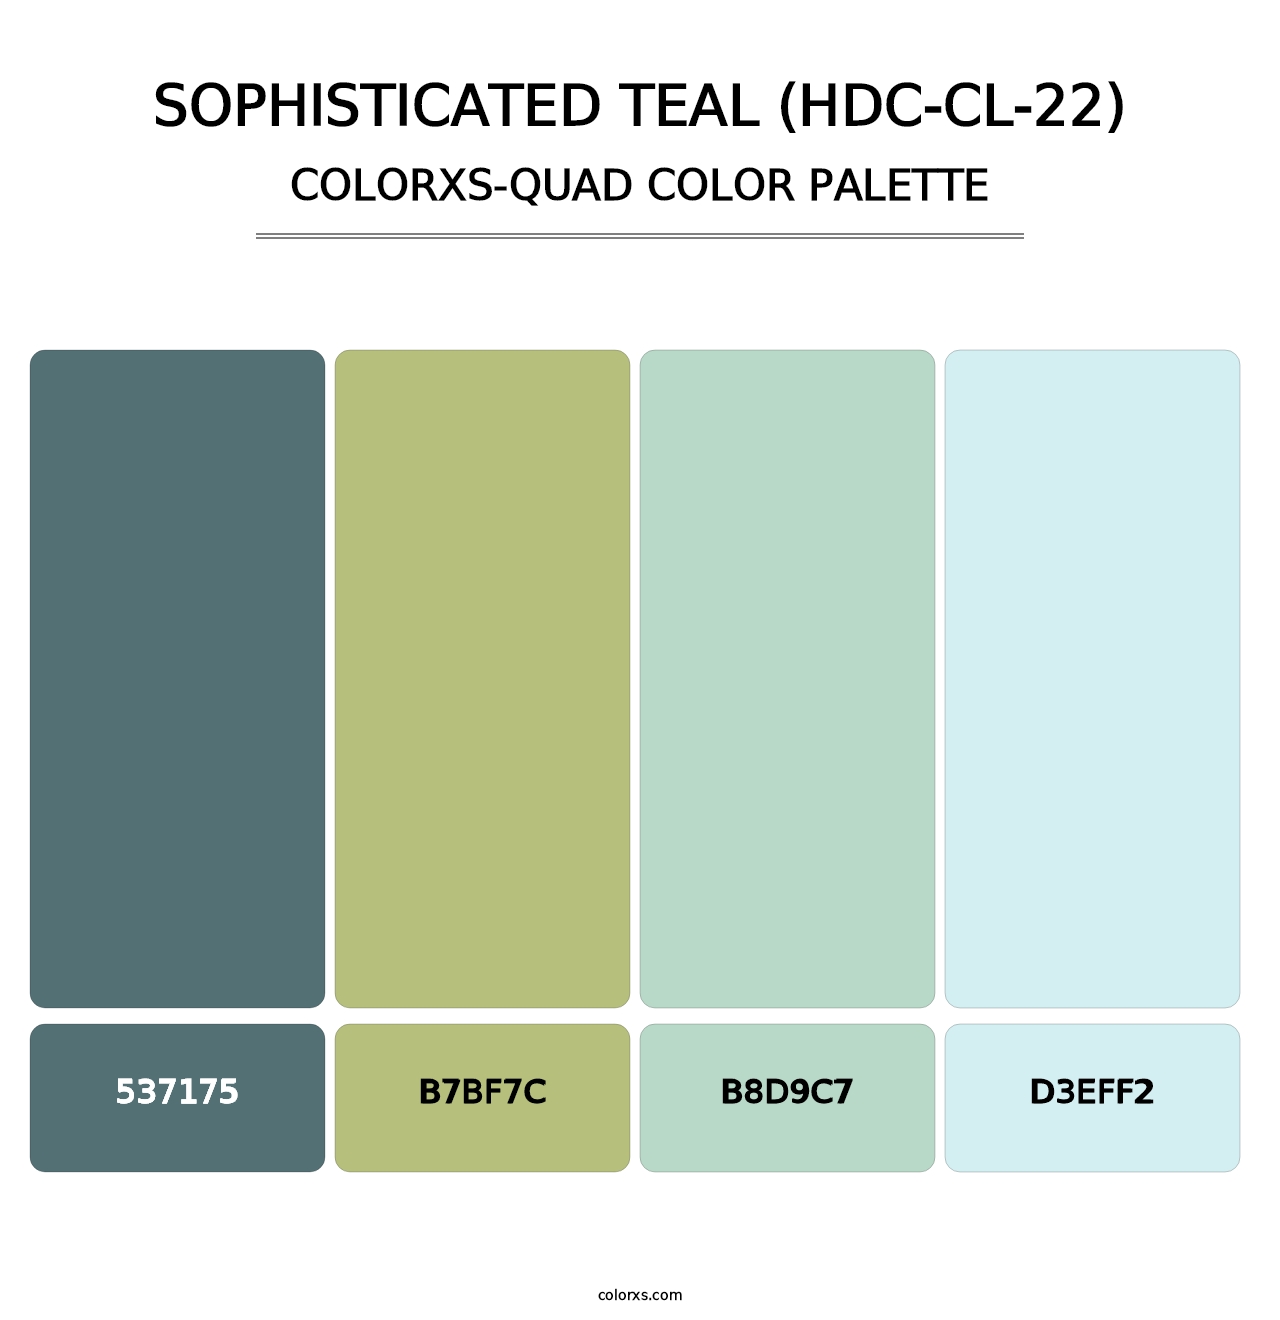 Sophisticated Teal (HDC-CL-22) - Colorxs Quad Palette